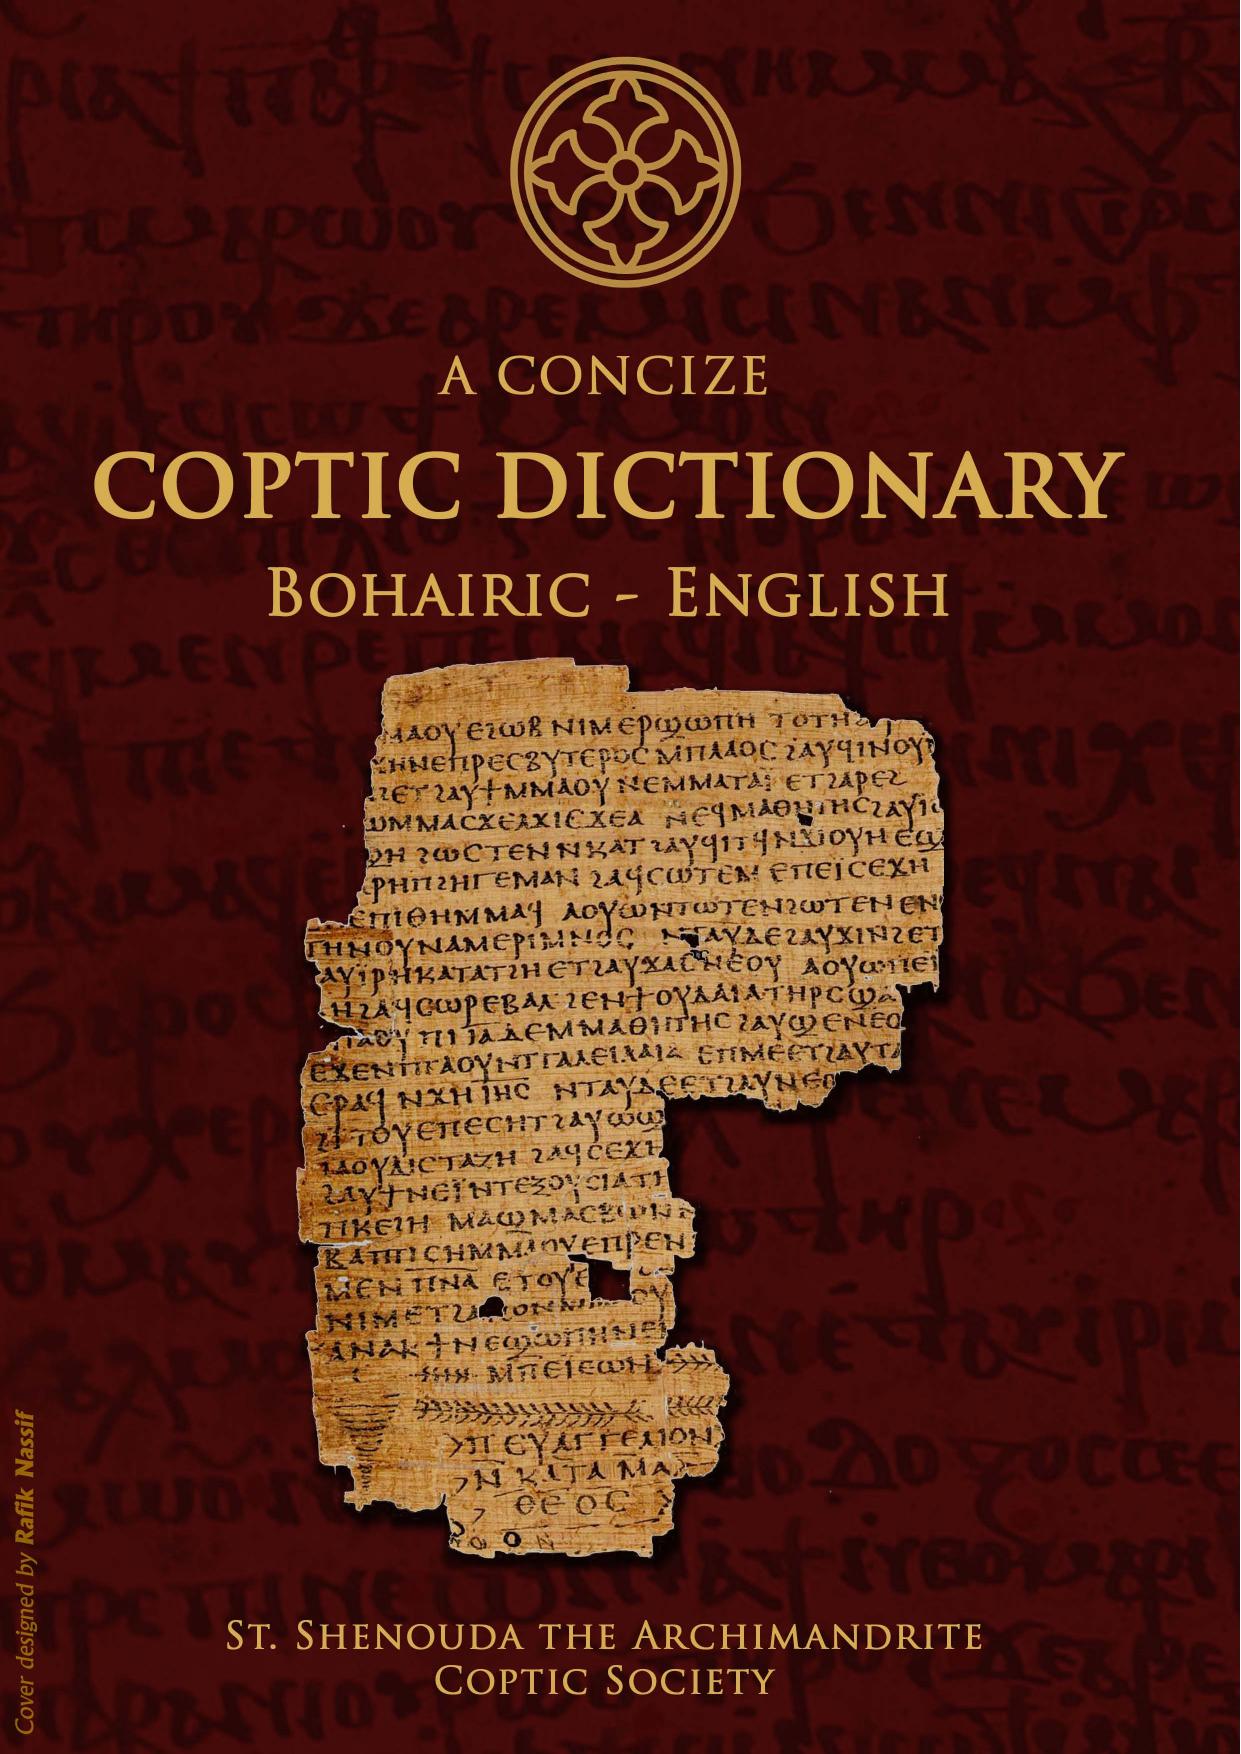 A Concise Coptic Dictionary Bohairic - English